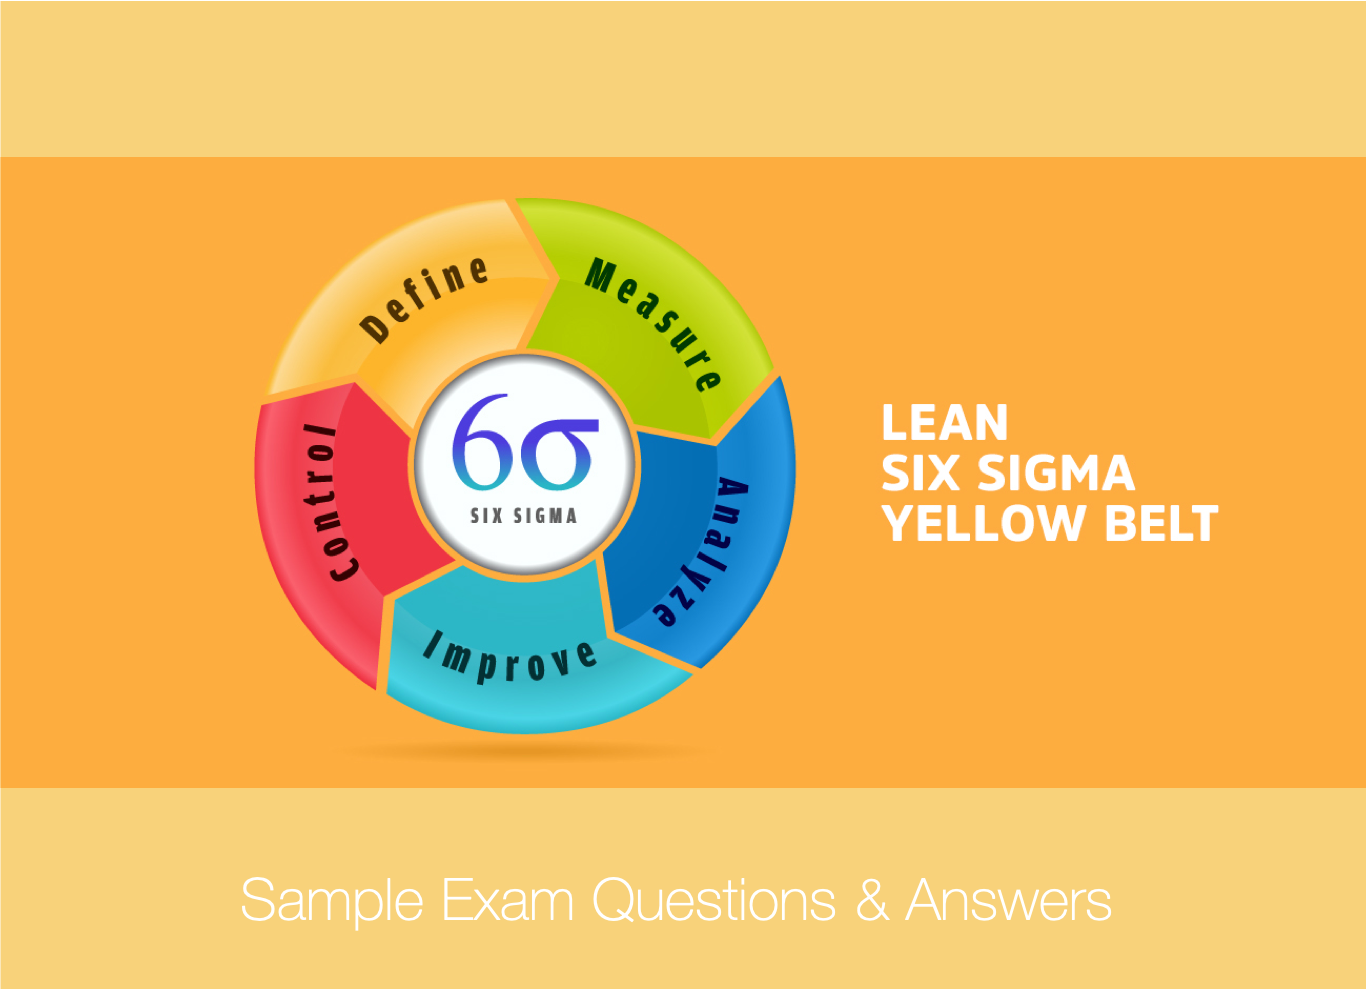 Lean Six Sigma - Yellow Belt - Examen de prueba